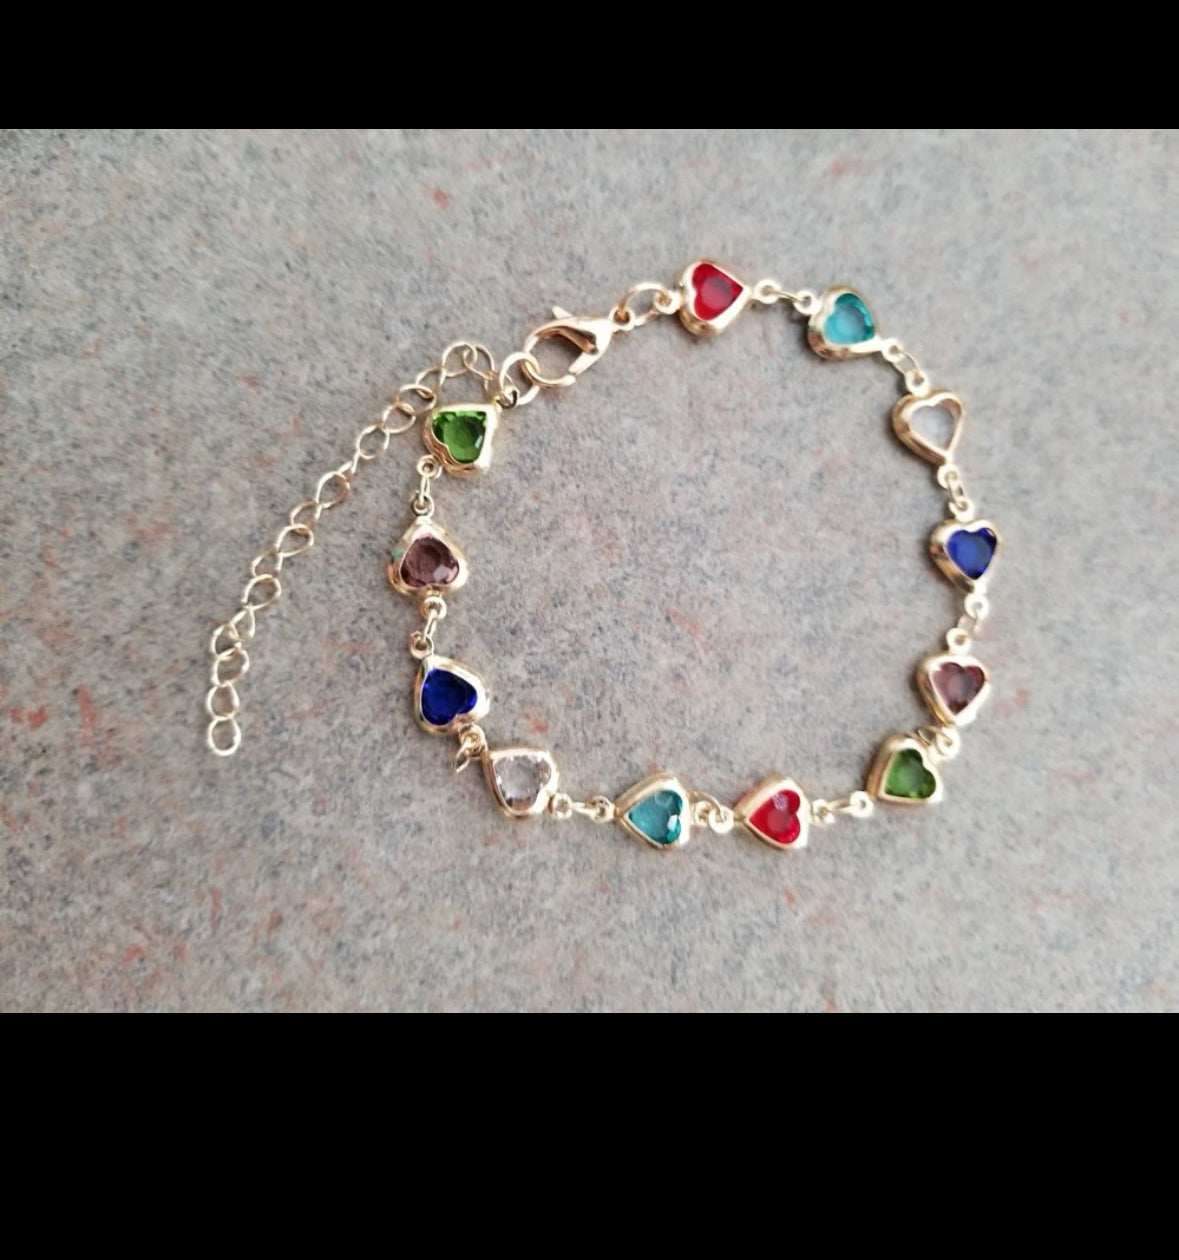 Colourful pearl bracelet, freshwater pearl beaded heart charm bracelet.